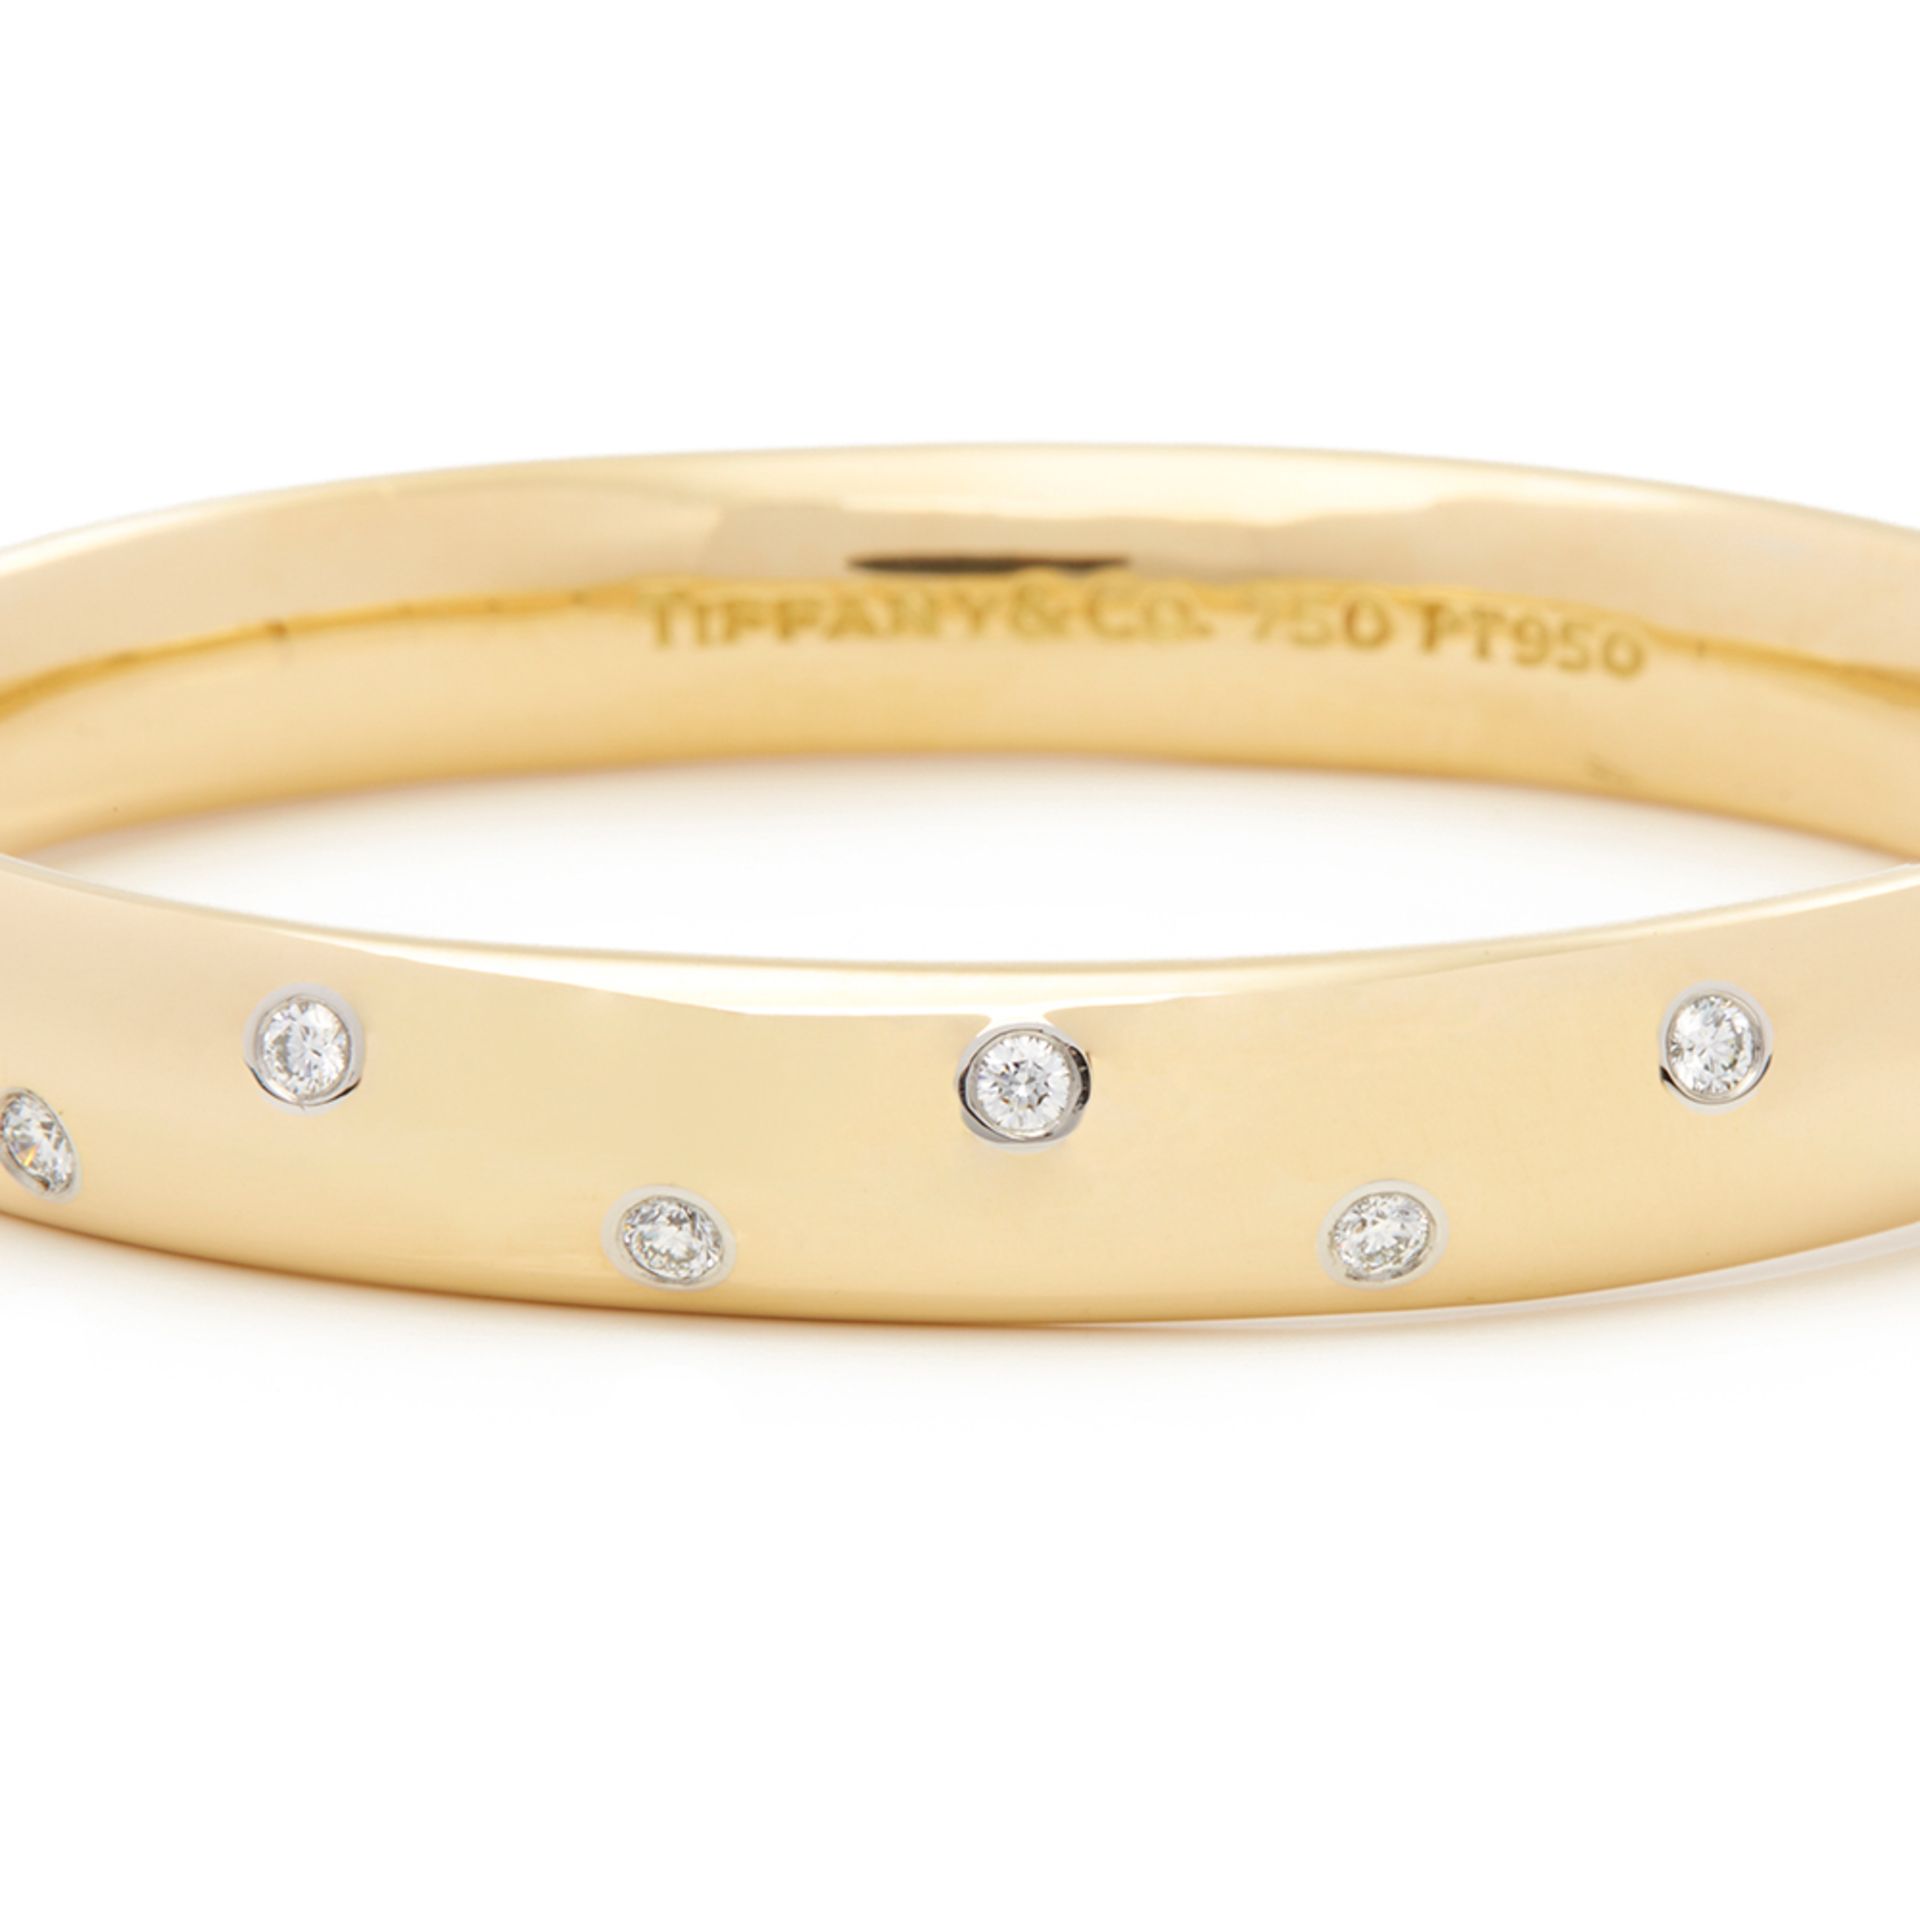 Tiffany & Co. 18k Yellow Gold Diamond Etoile Bracelet ***Reserve lowered*** - Image 5 of 9